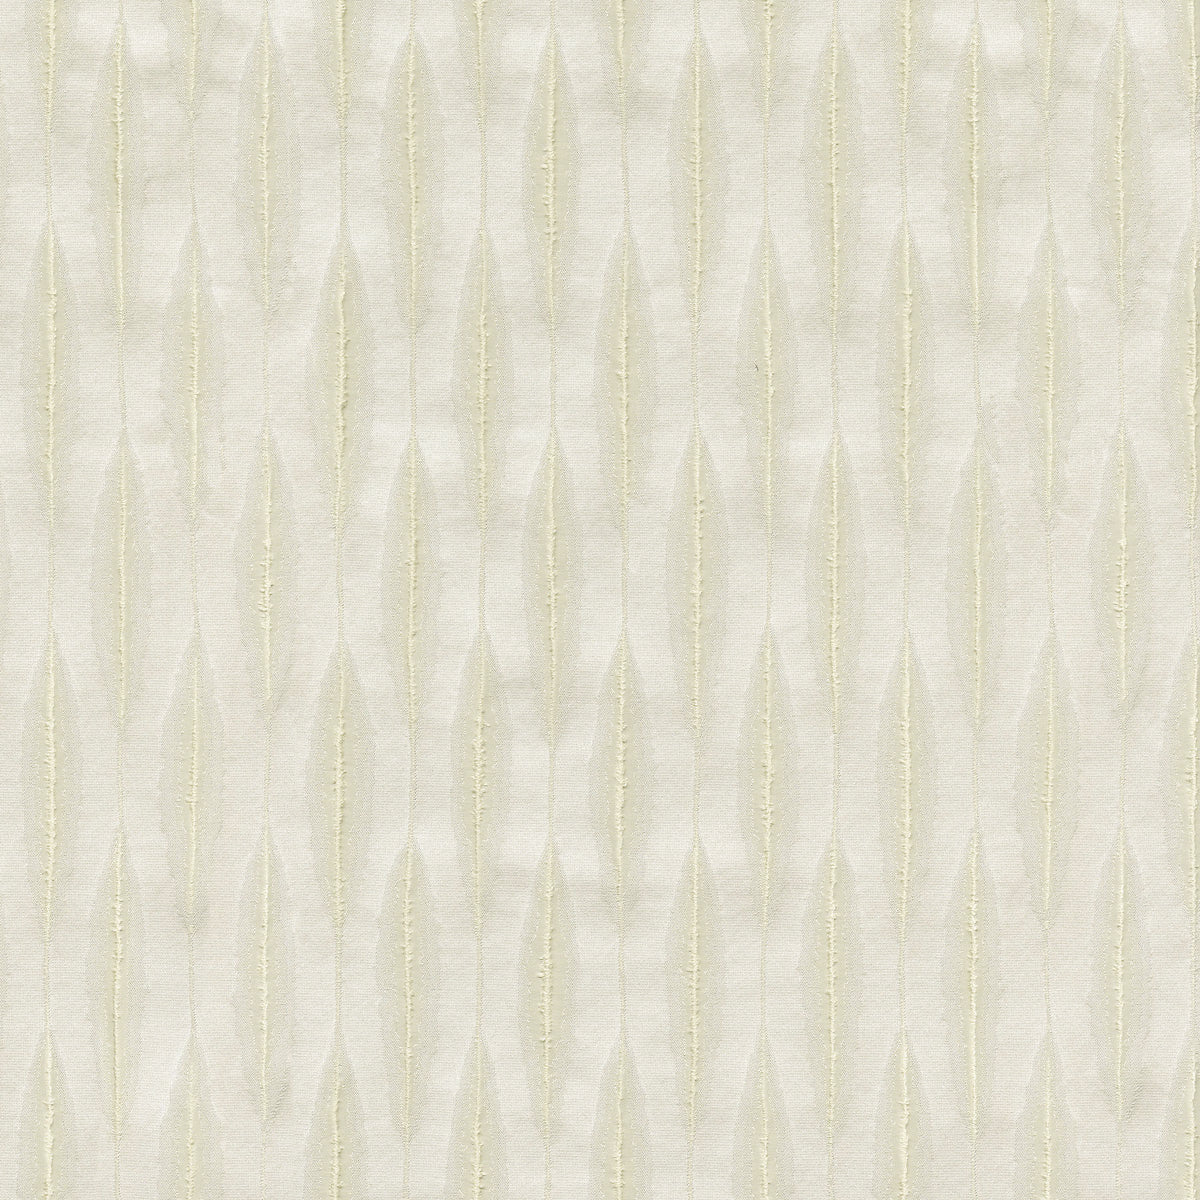 P/K Lifestyles Portia - Cream 470751 Upholstery Fabric